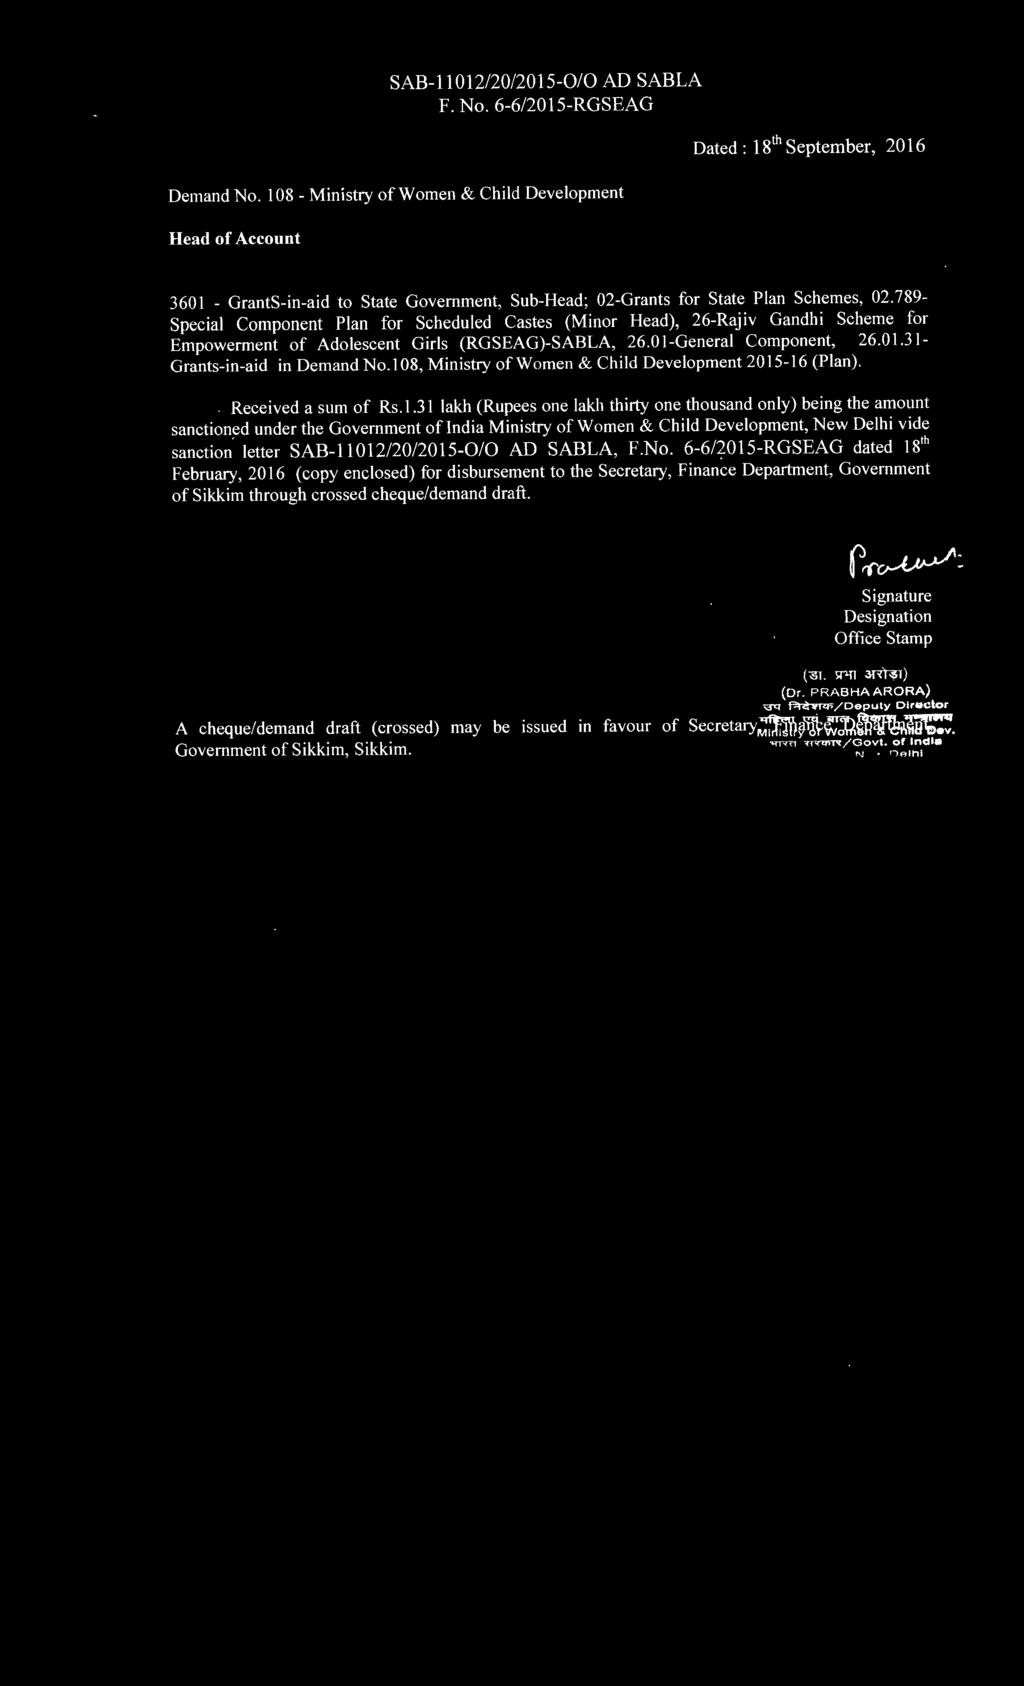 sanctioned under the Government oflndia Ministry of Women & Child Development, vide sanction letter SAB-11012/20/2015-0/0 AD SABLA, F.No.